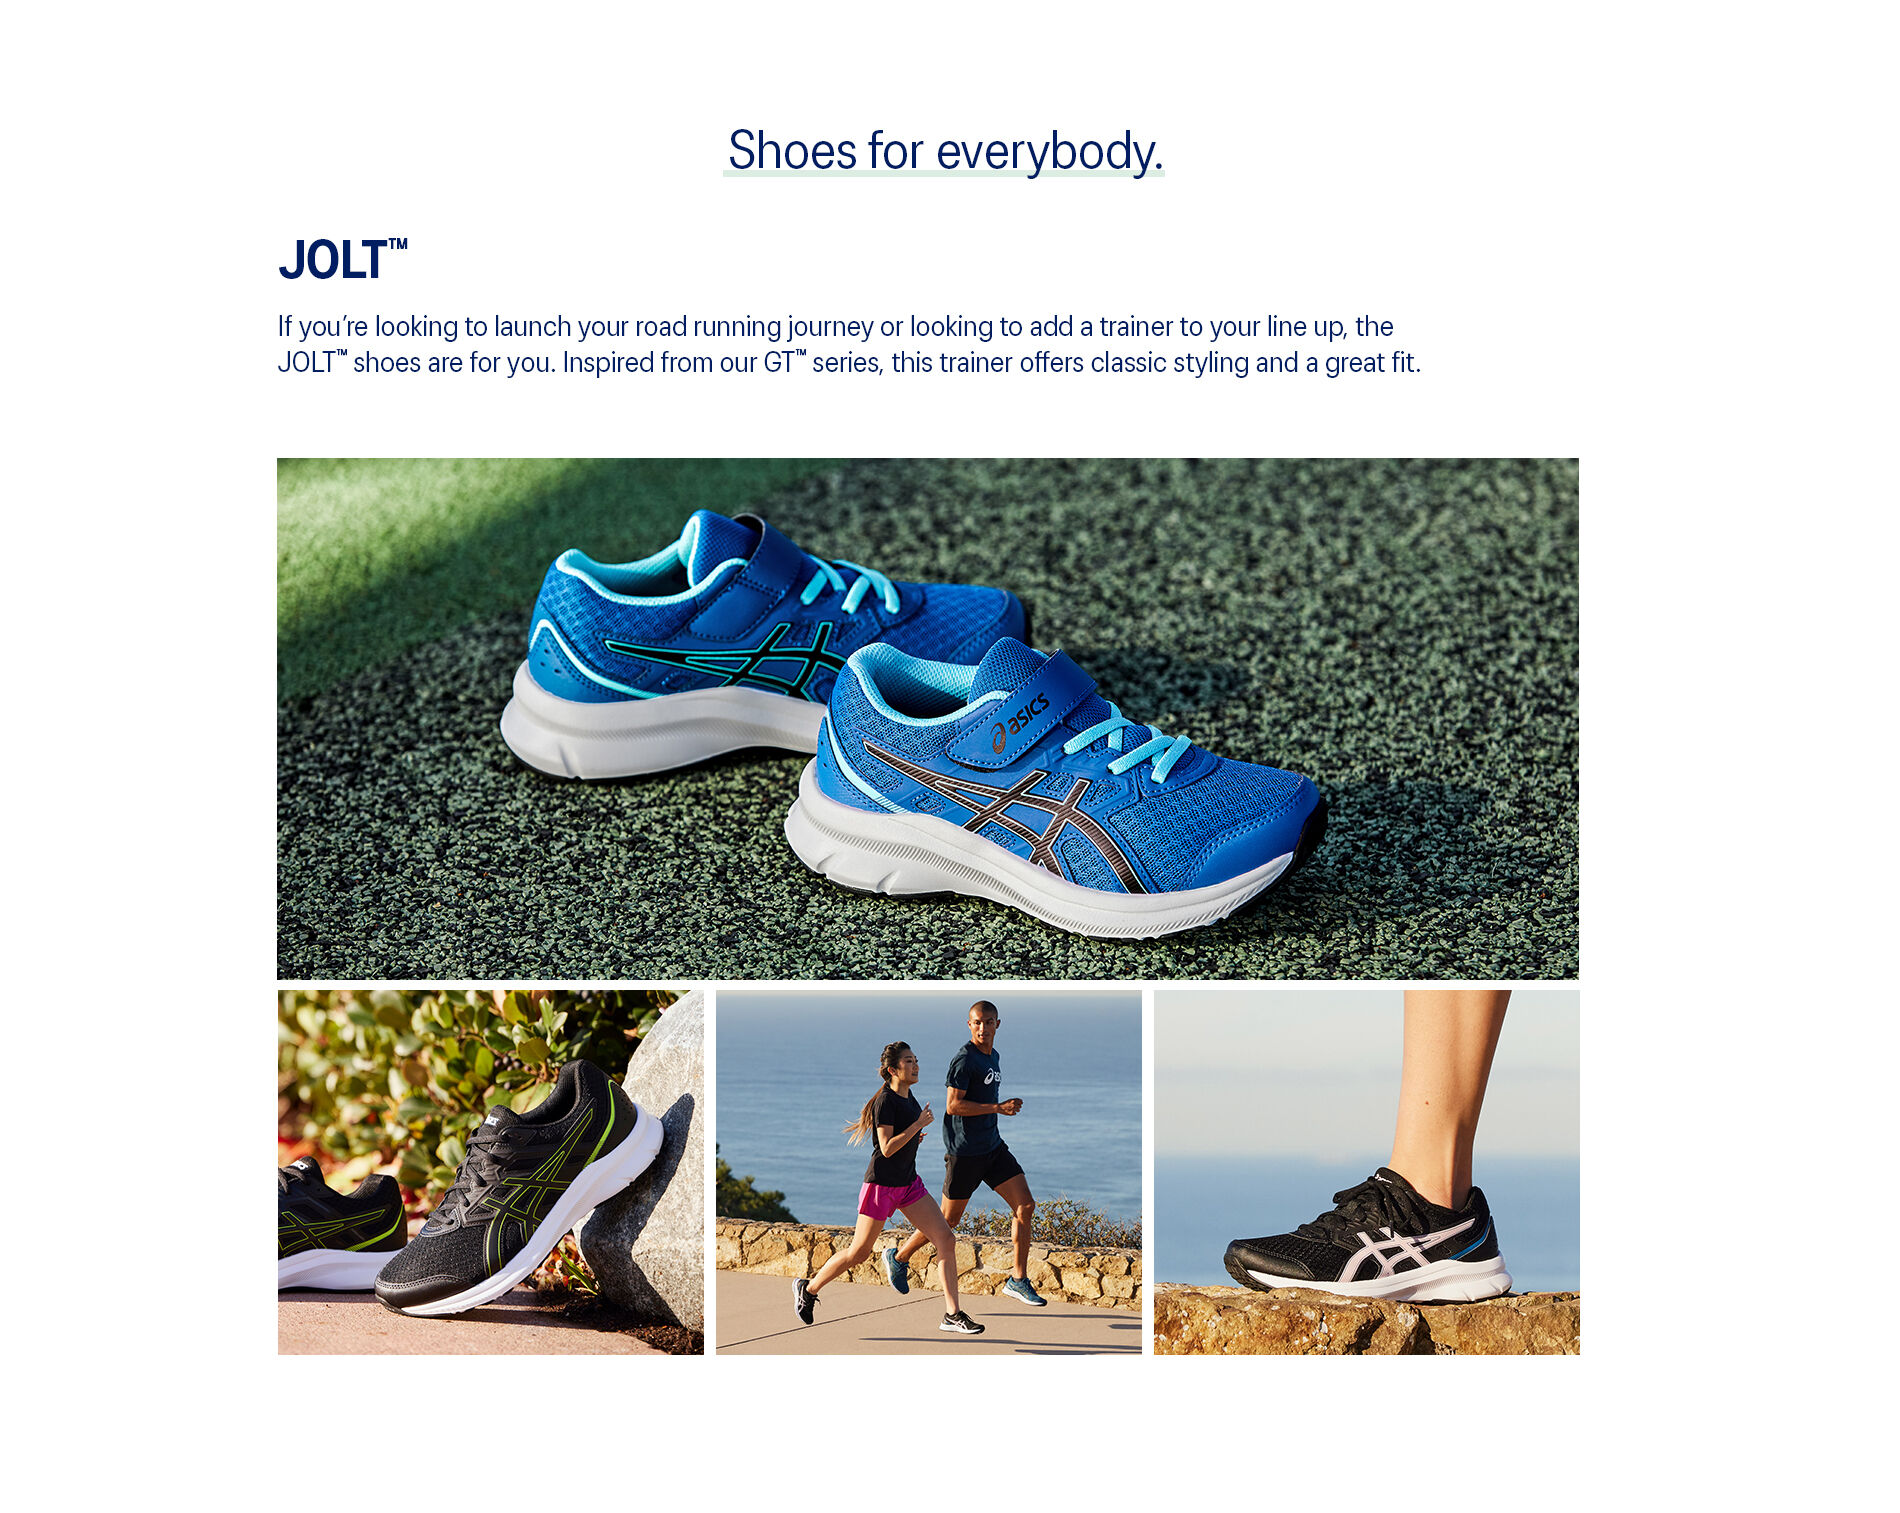 Achat chaussures Asics Homme Chaussure de Sport, vente Asics JOLT 3 -  1011b034-401 - French Blue - Black - Basket running H